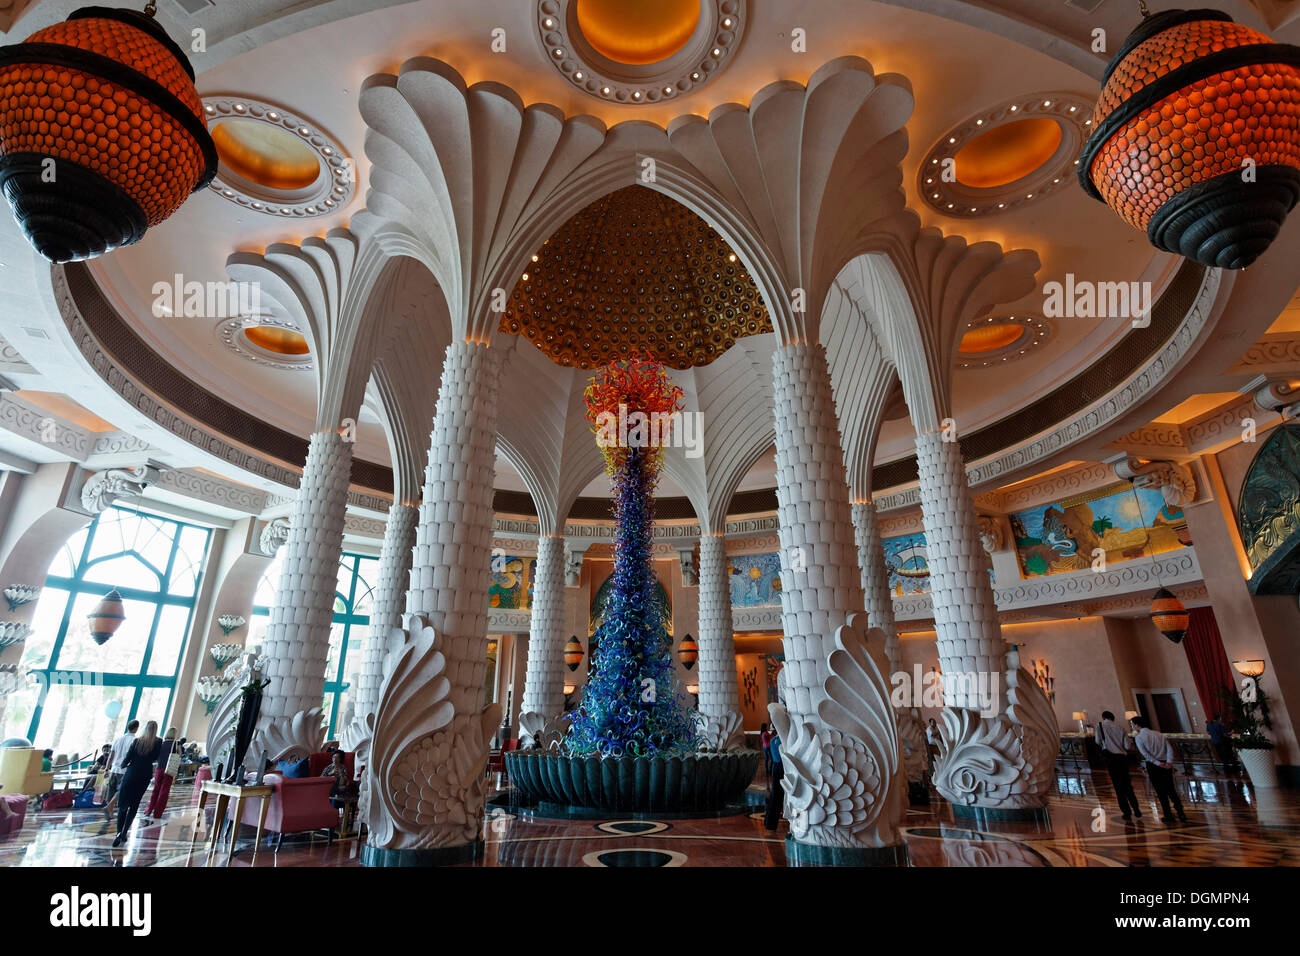 Spectacular pillared hall, Atlantis luxury hotel, The Palm Jumeirah, Dubai, United Arab Emirates, Middle East, Asia Stock Photo